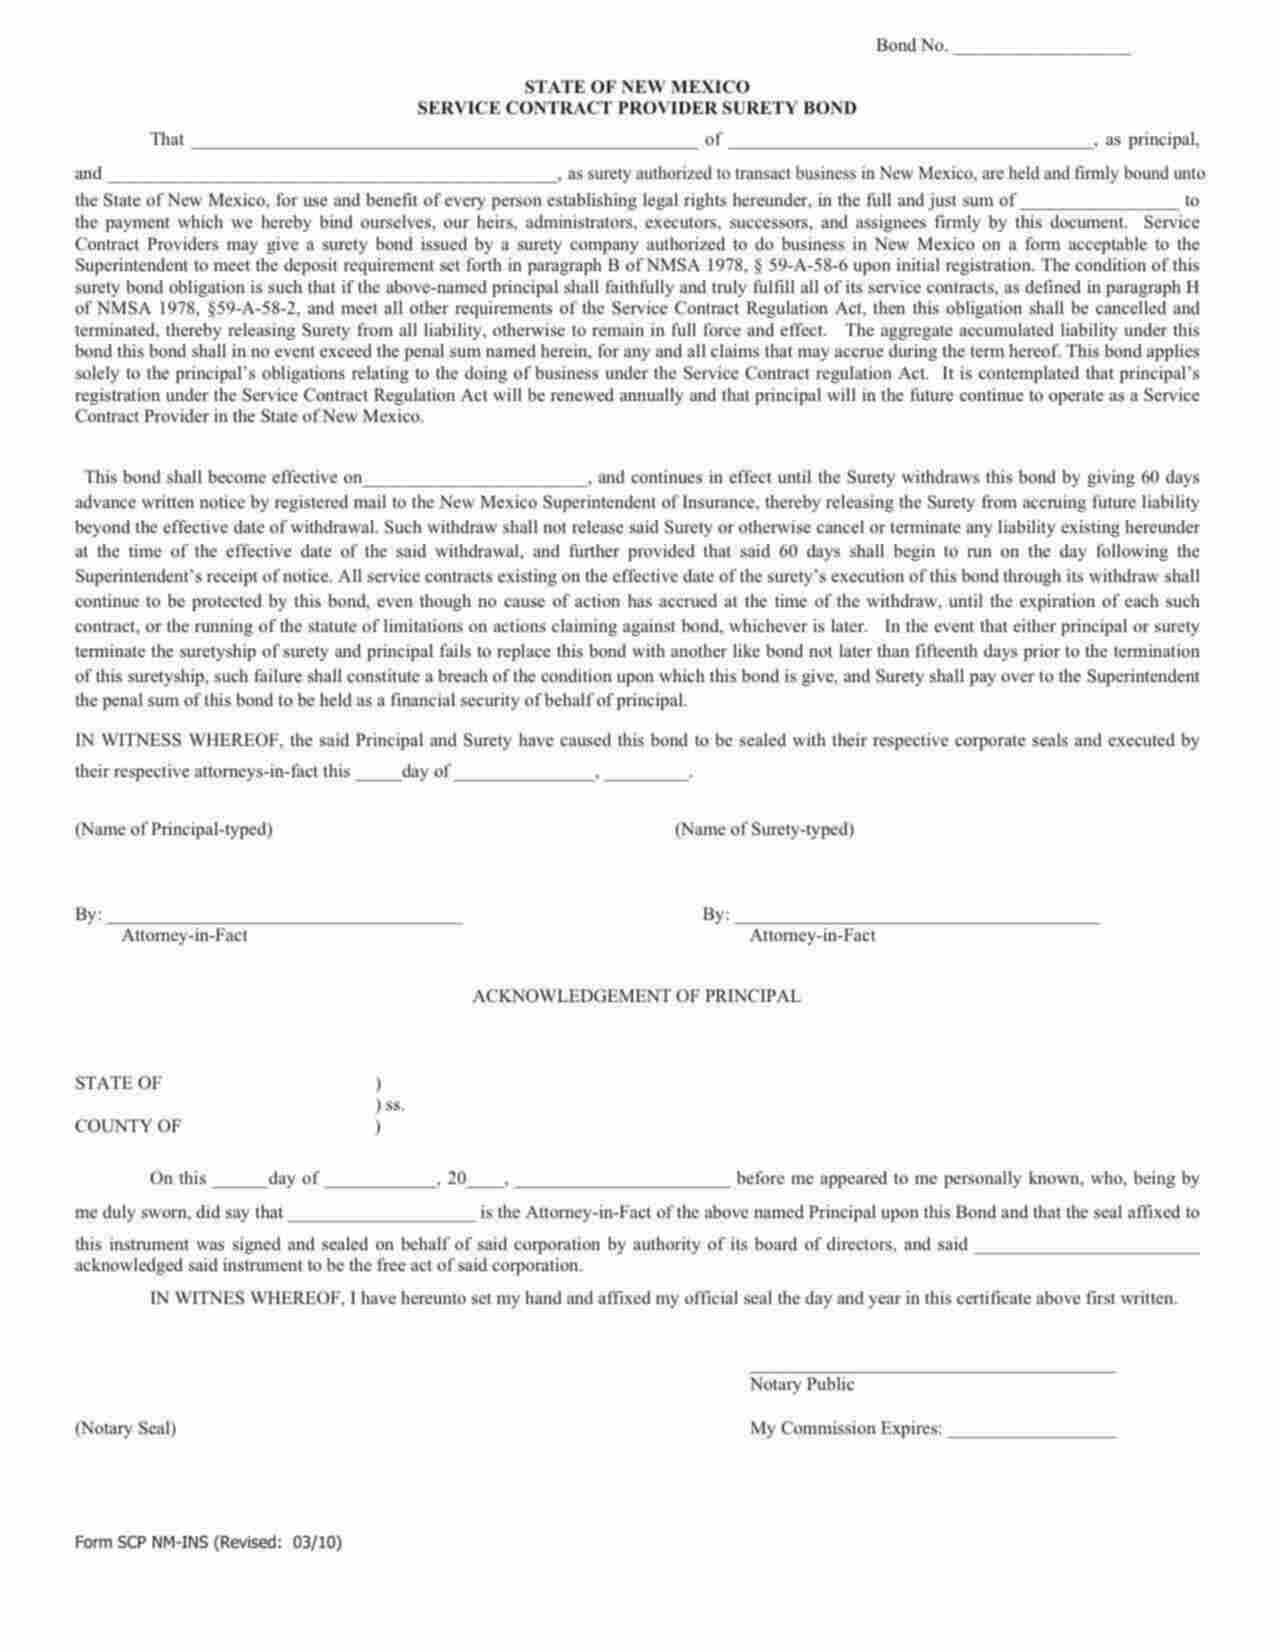 New Mexico Service Contract Provider Bond Form